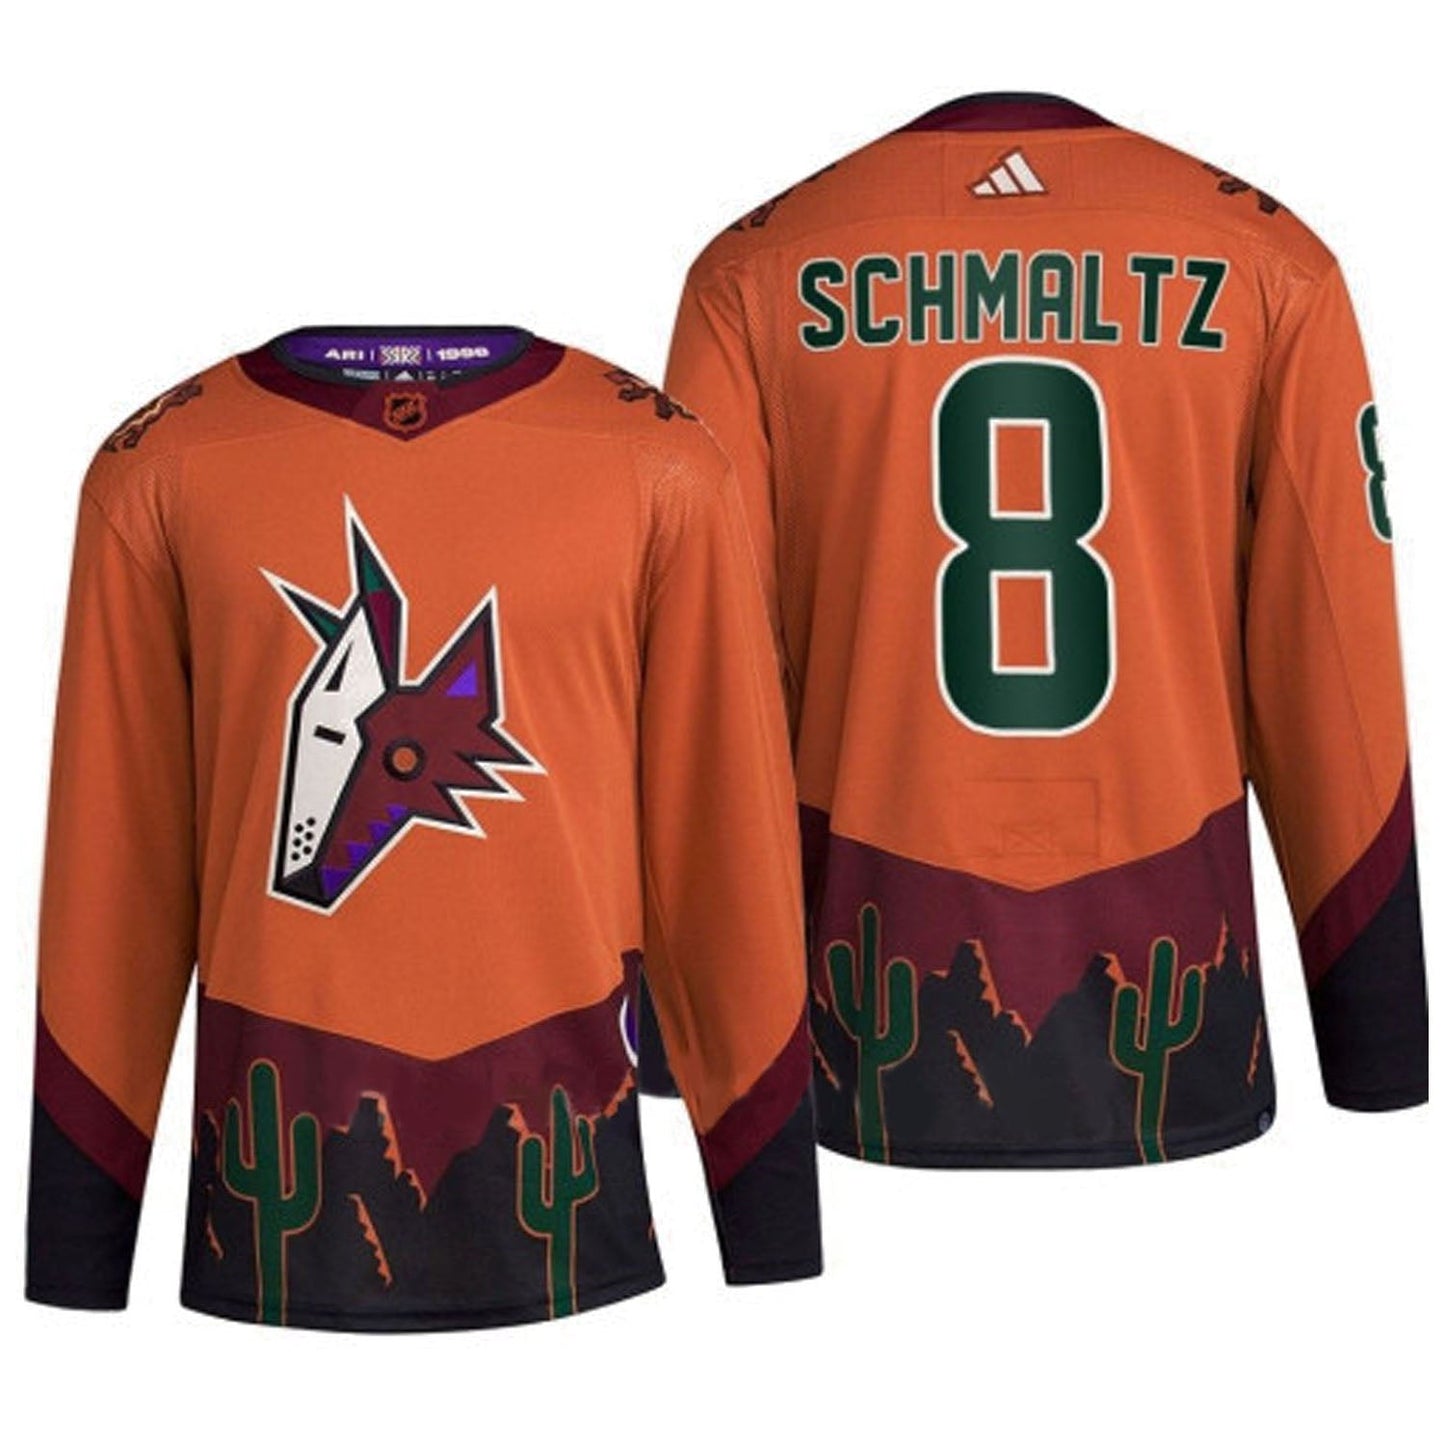 NHL Nick Schmaltz Arizona Coyotes 8 Jersey